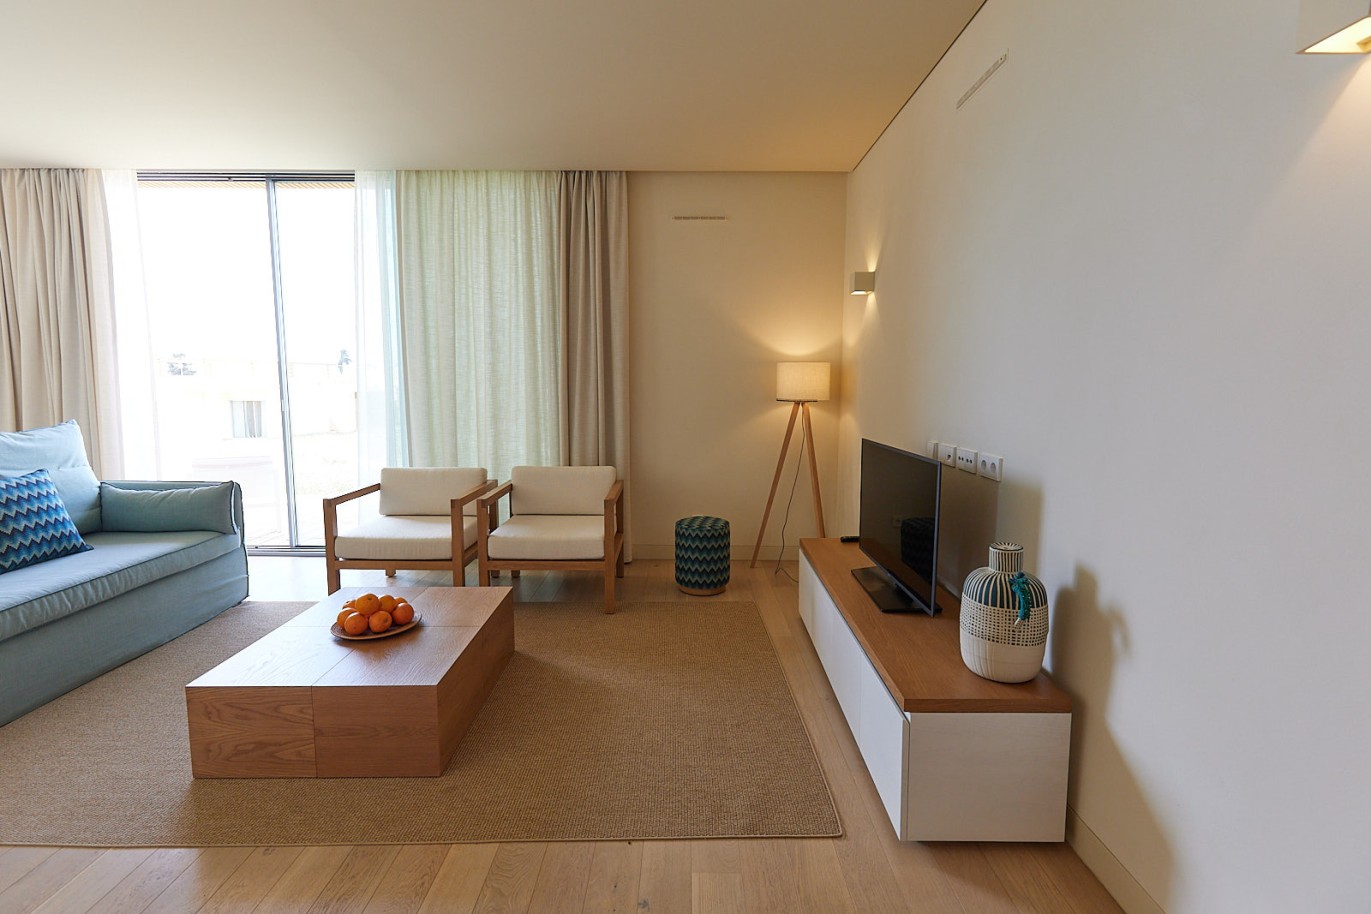 2 bedroom apartment in resort, for sale in Porches, Algarve_230680